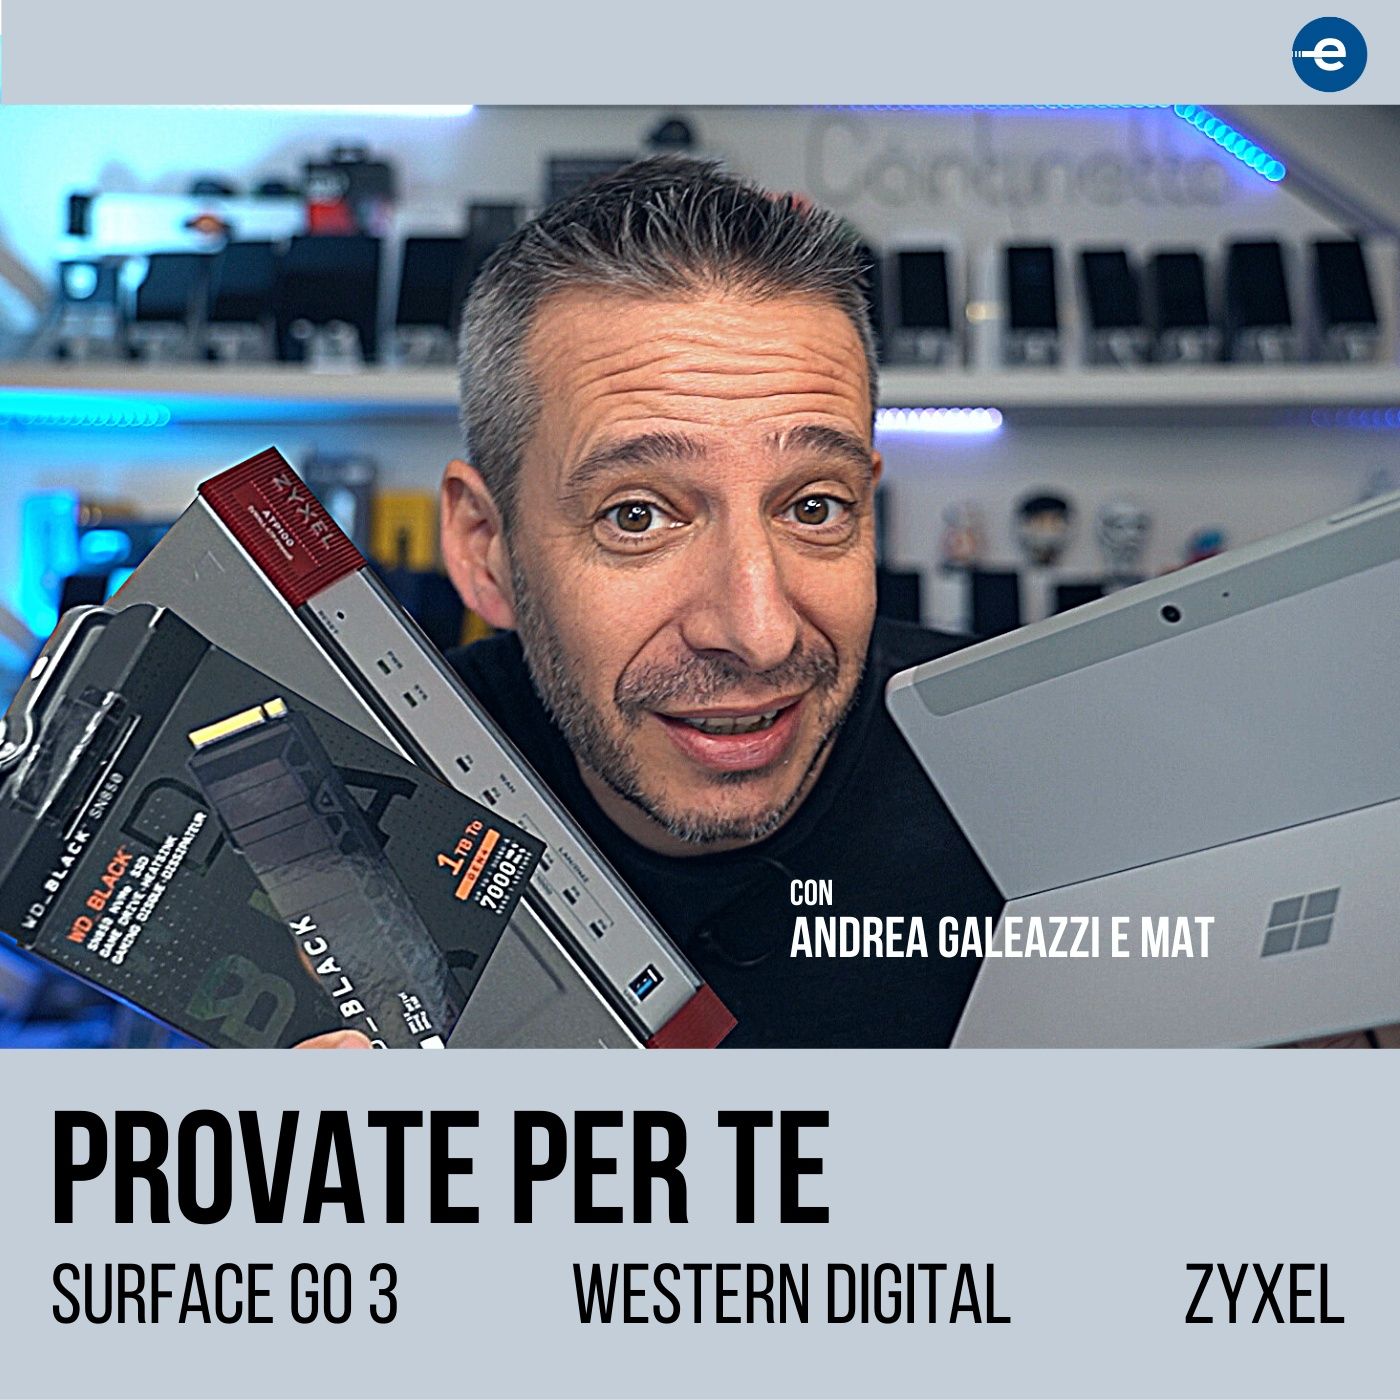 Andrea Galeazzi prova Surface GO3, Western Digital e Zyxel